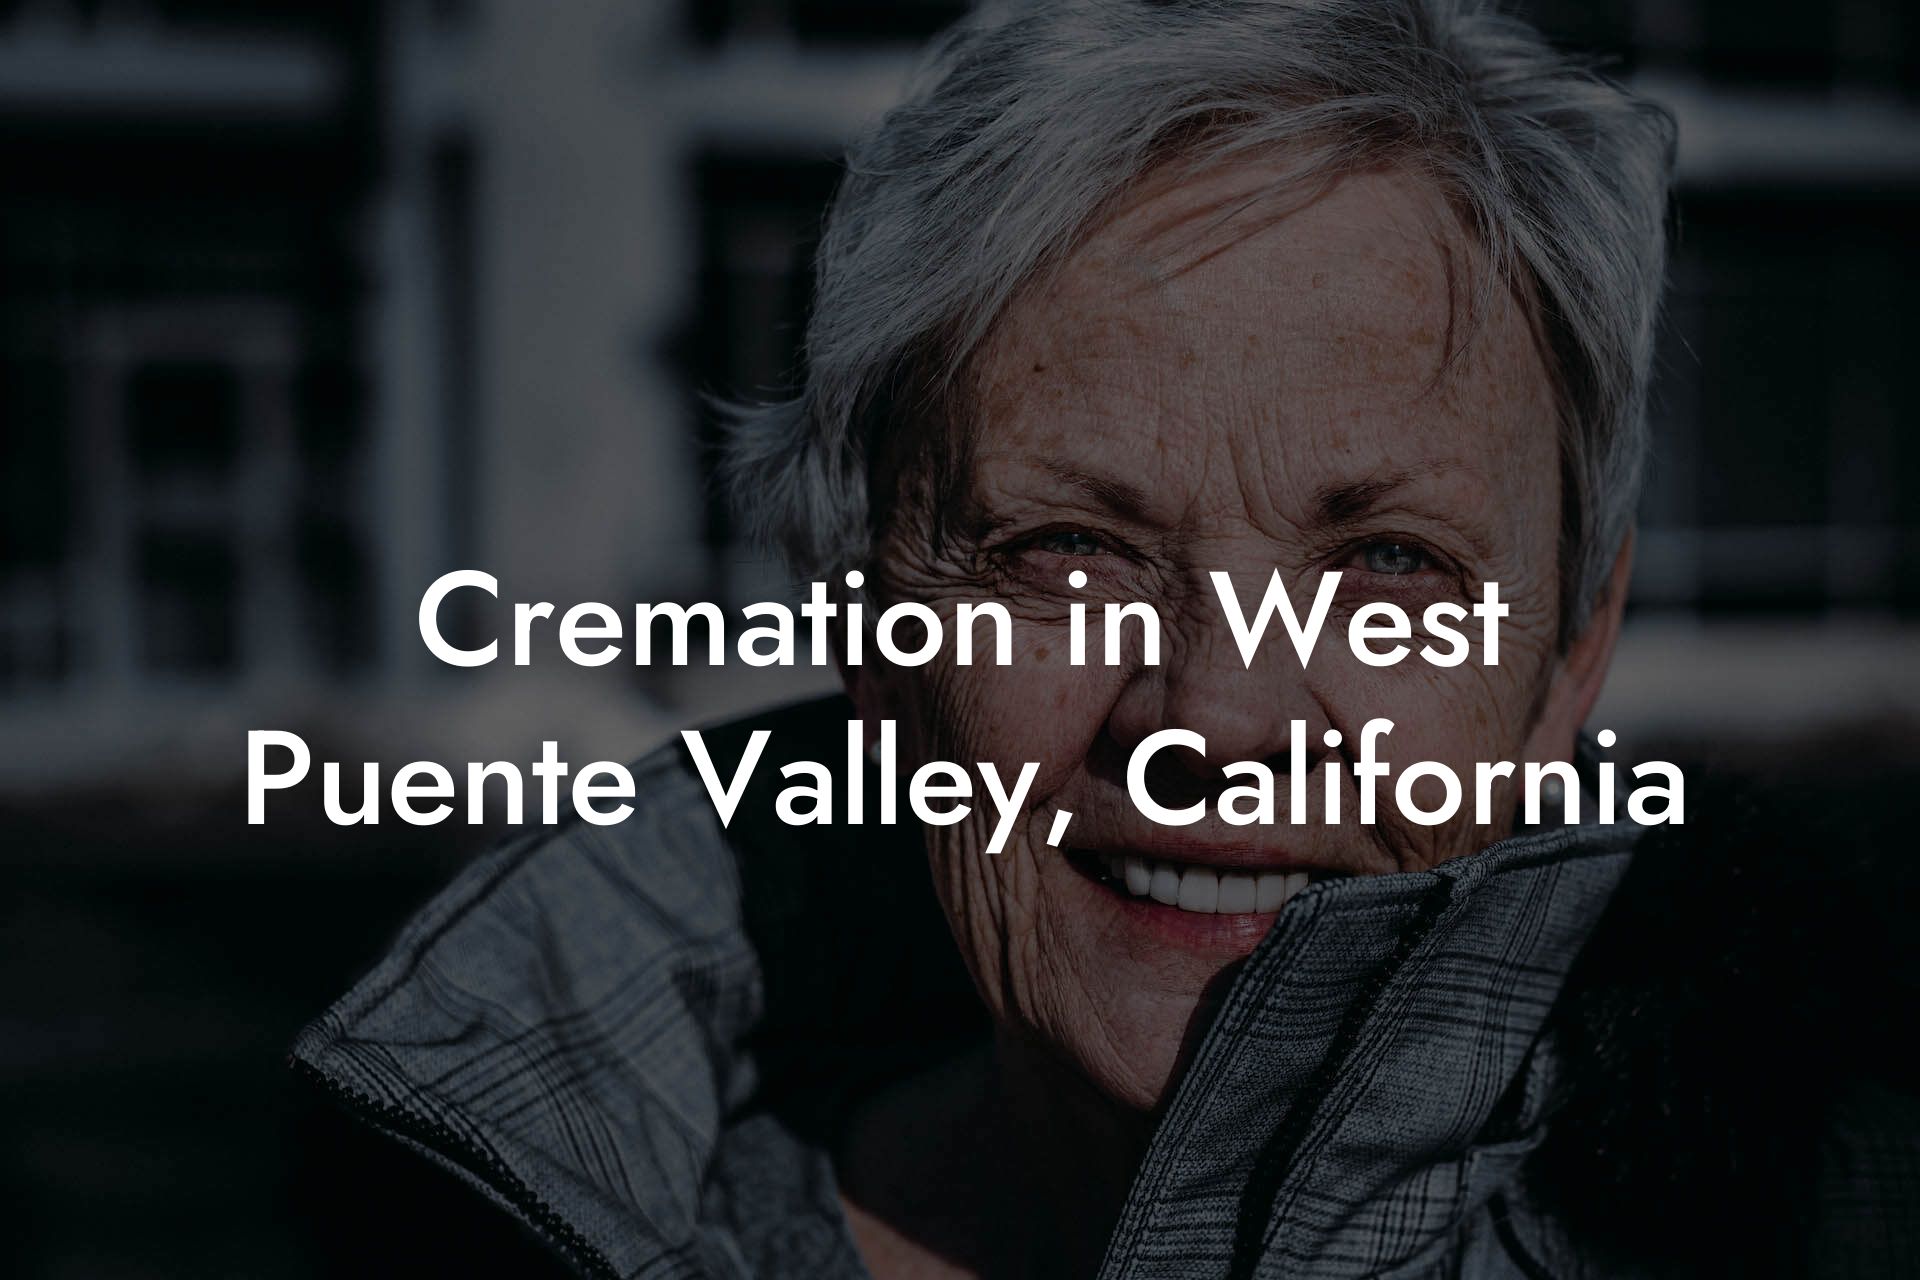 Cremation in West Puente Valley, California